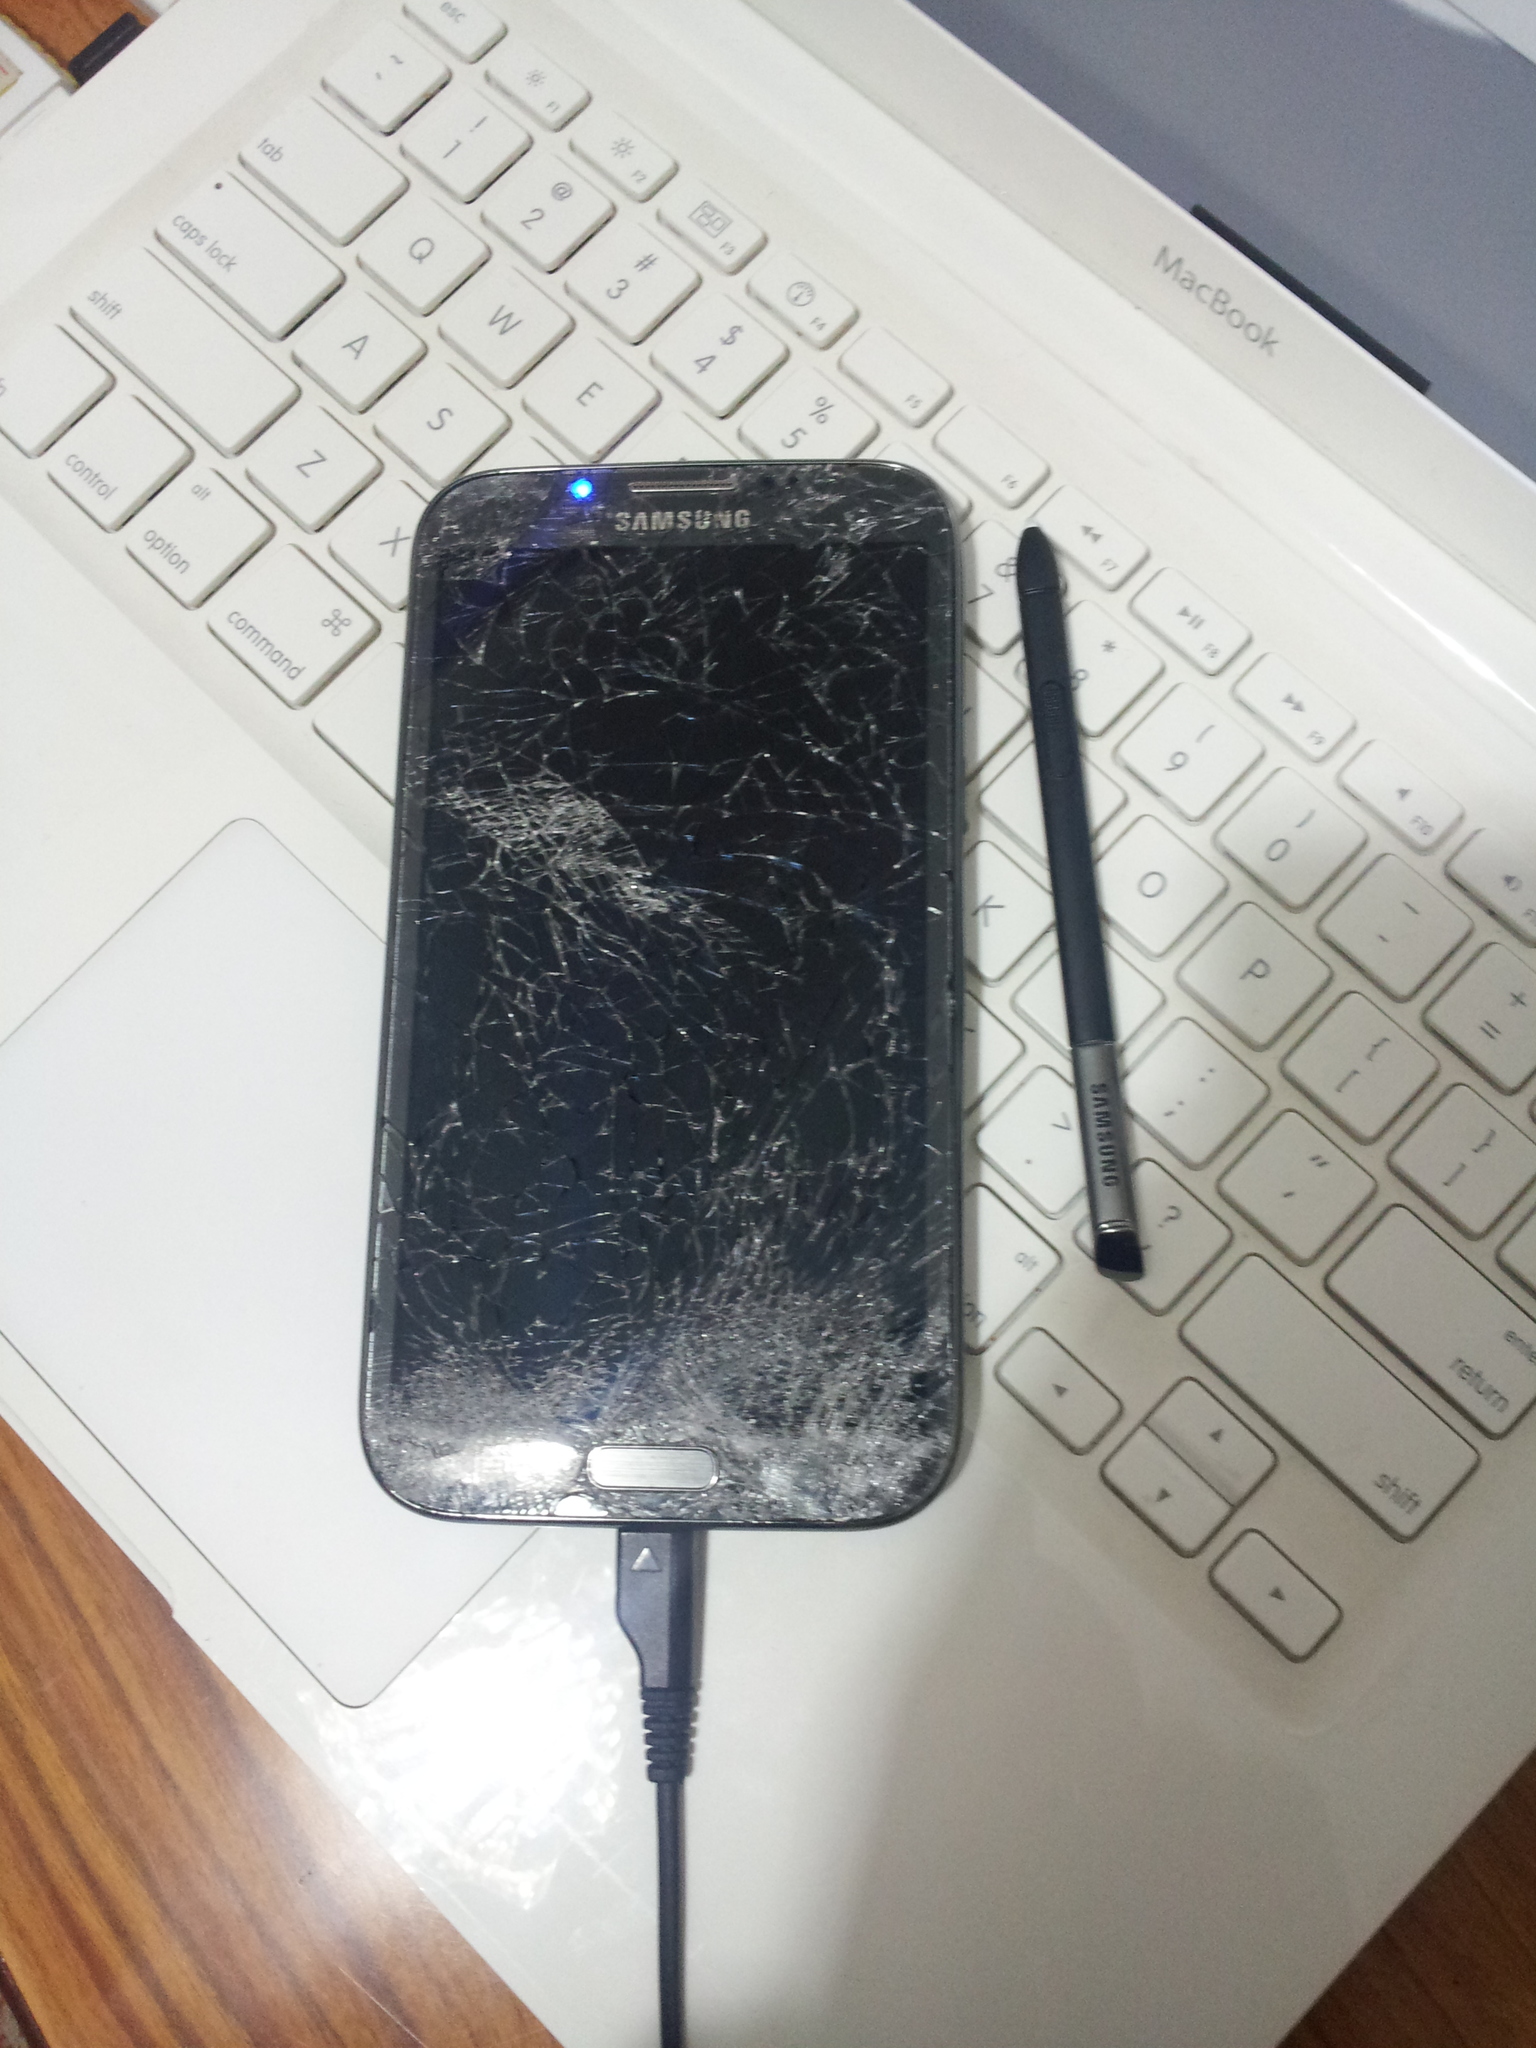  Samsung Note 2 Ekran kırık 400TL